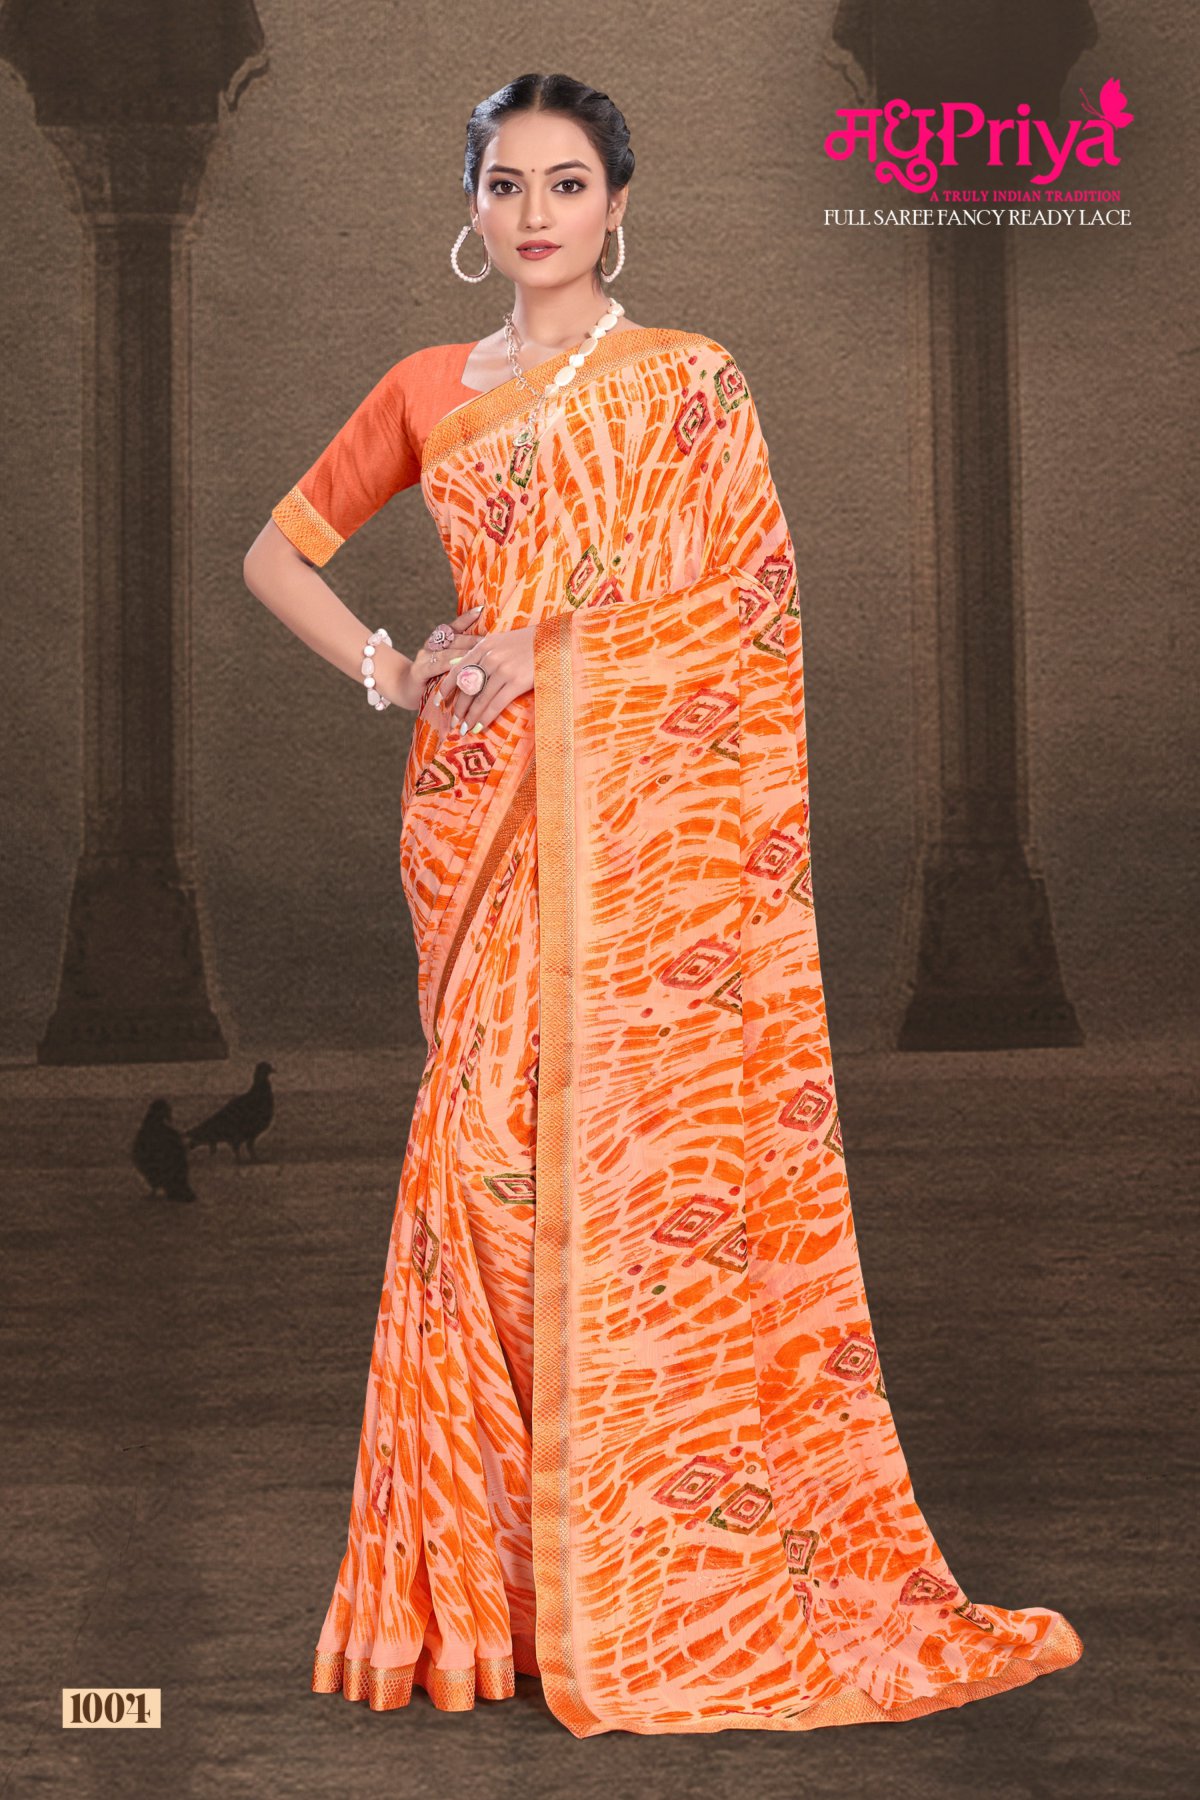 Madhupriya Lekha Wholesale Full Saree Fancy Lace Sarees